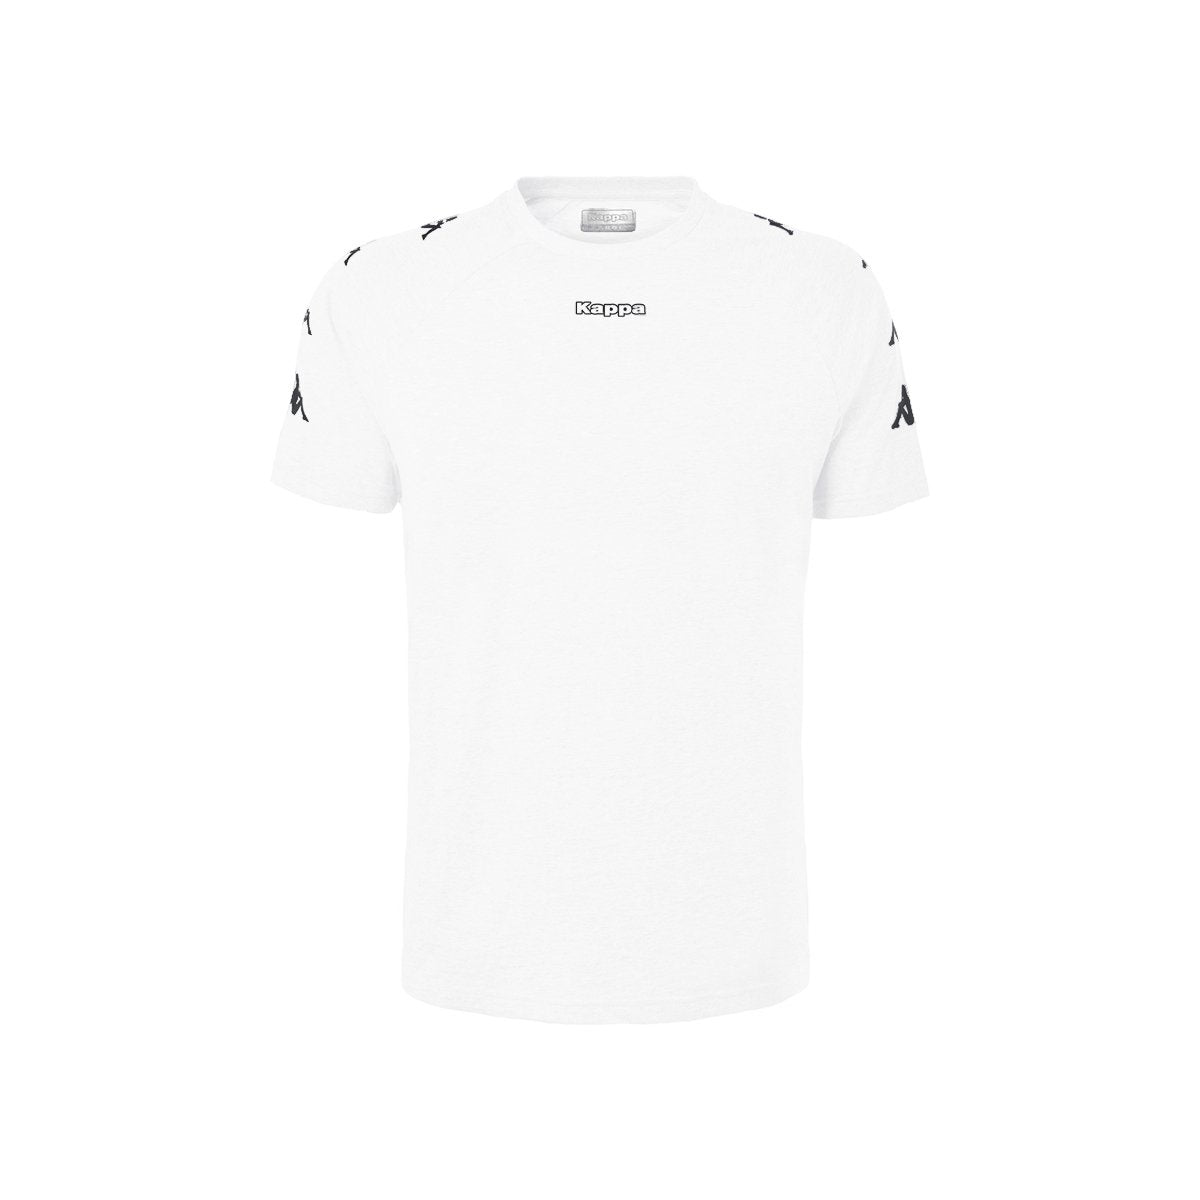 Camiseta Klake blanco hombre - Imagen 4